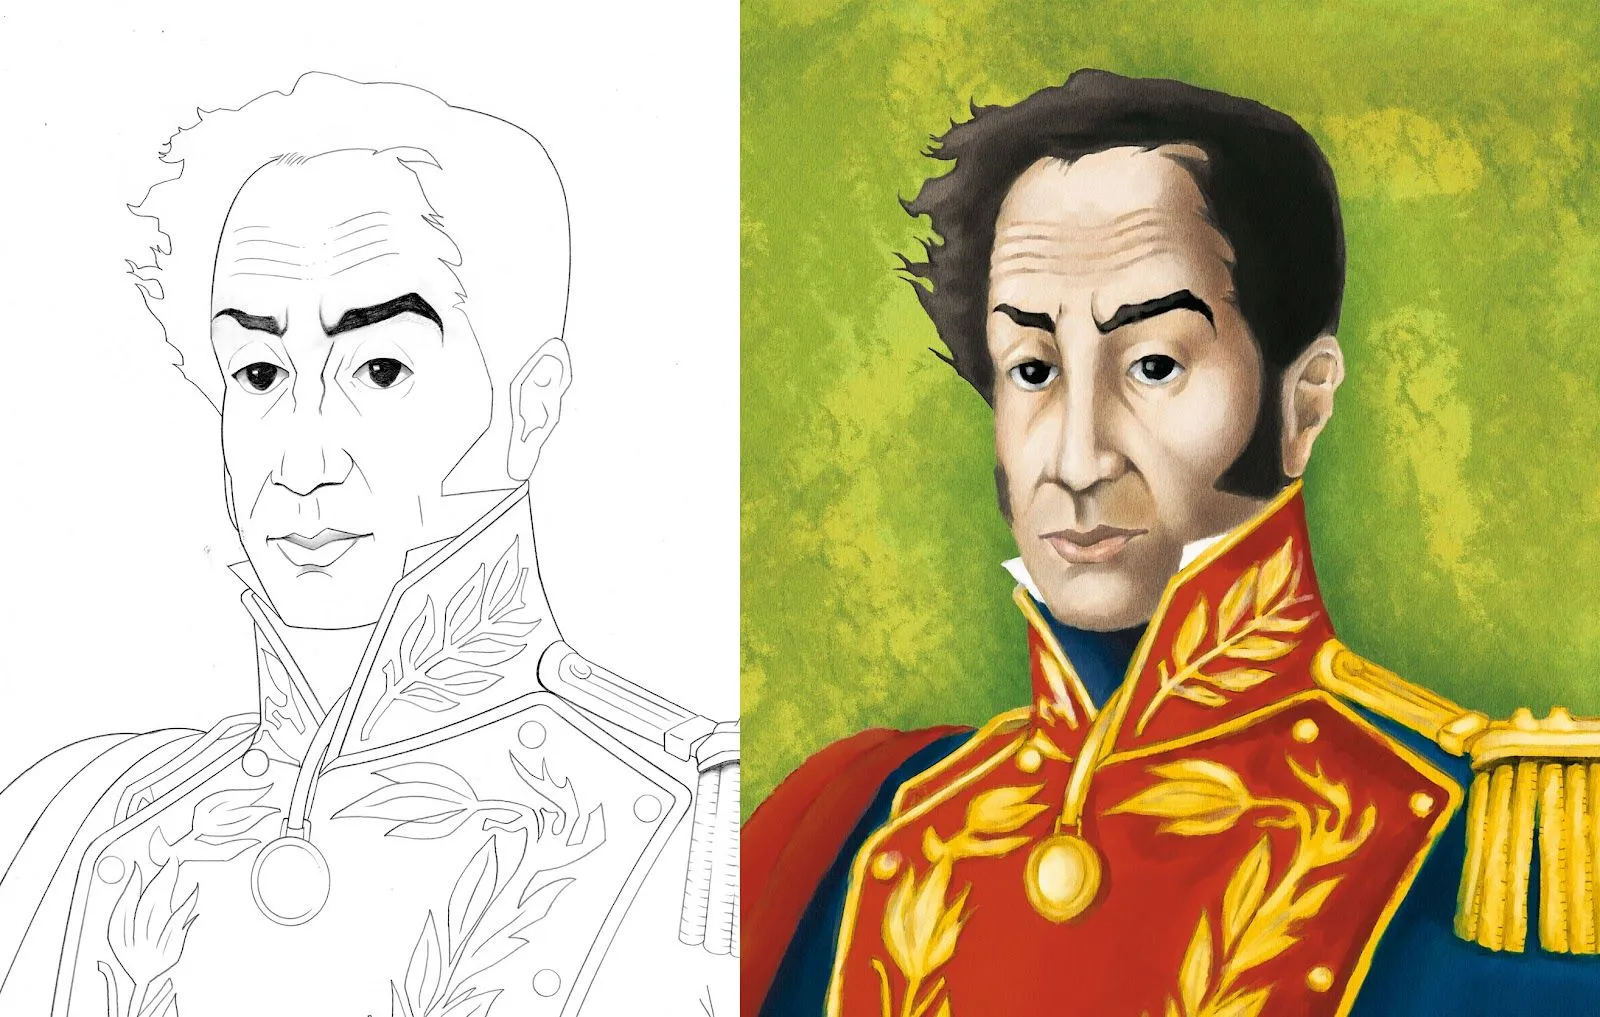 Simón Bolivar dibujos a colorear para niños | Busco imagenes